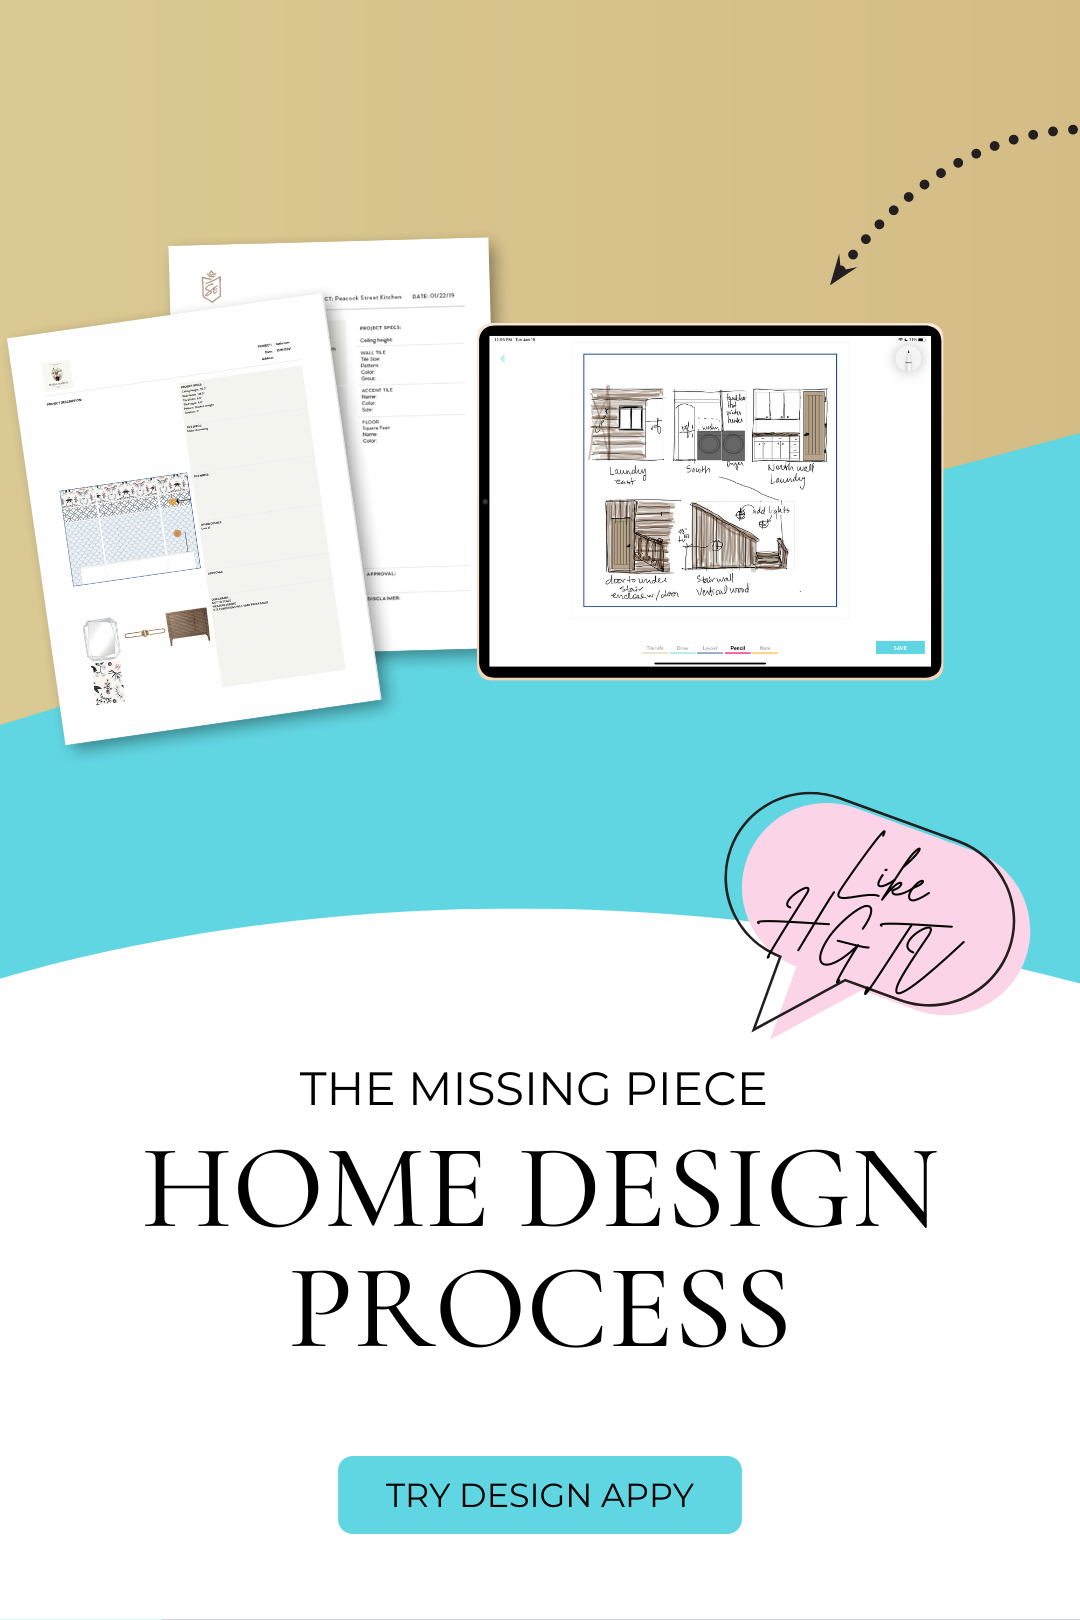 HGTV style home design program